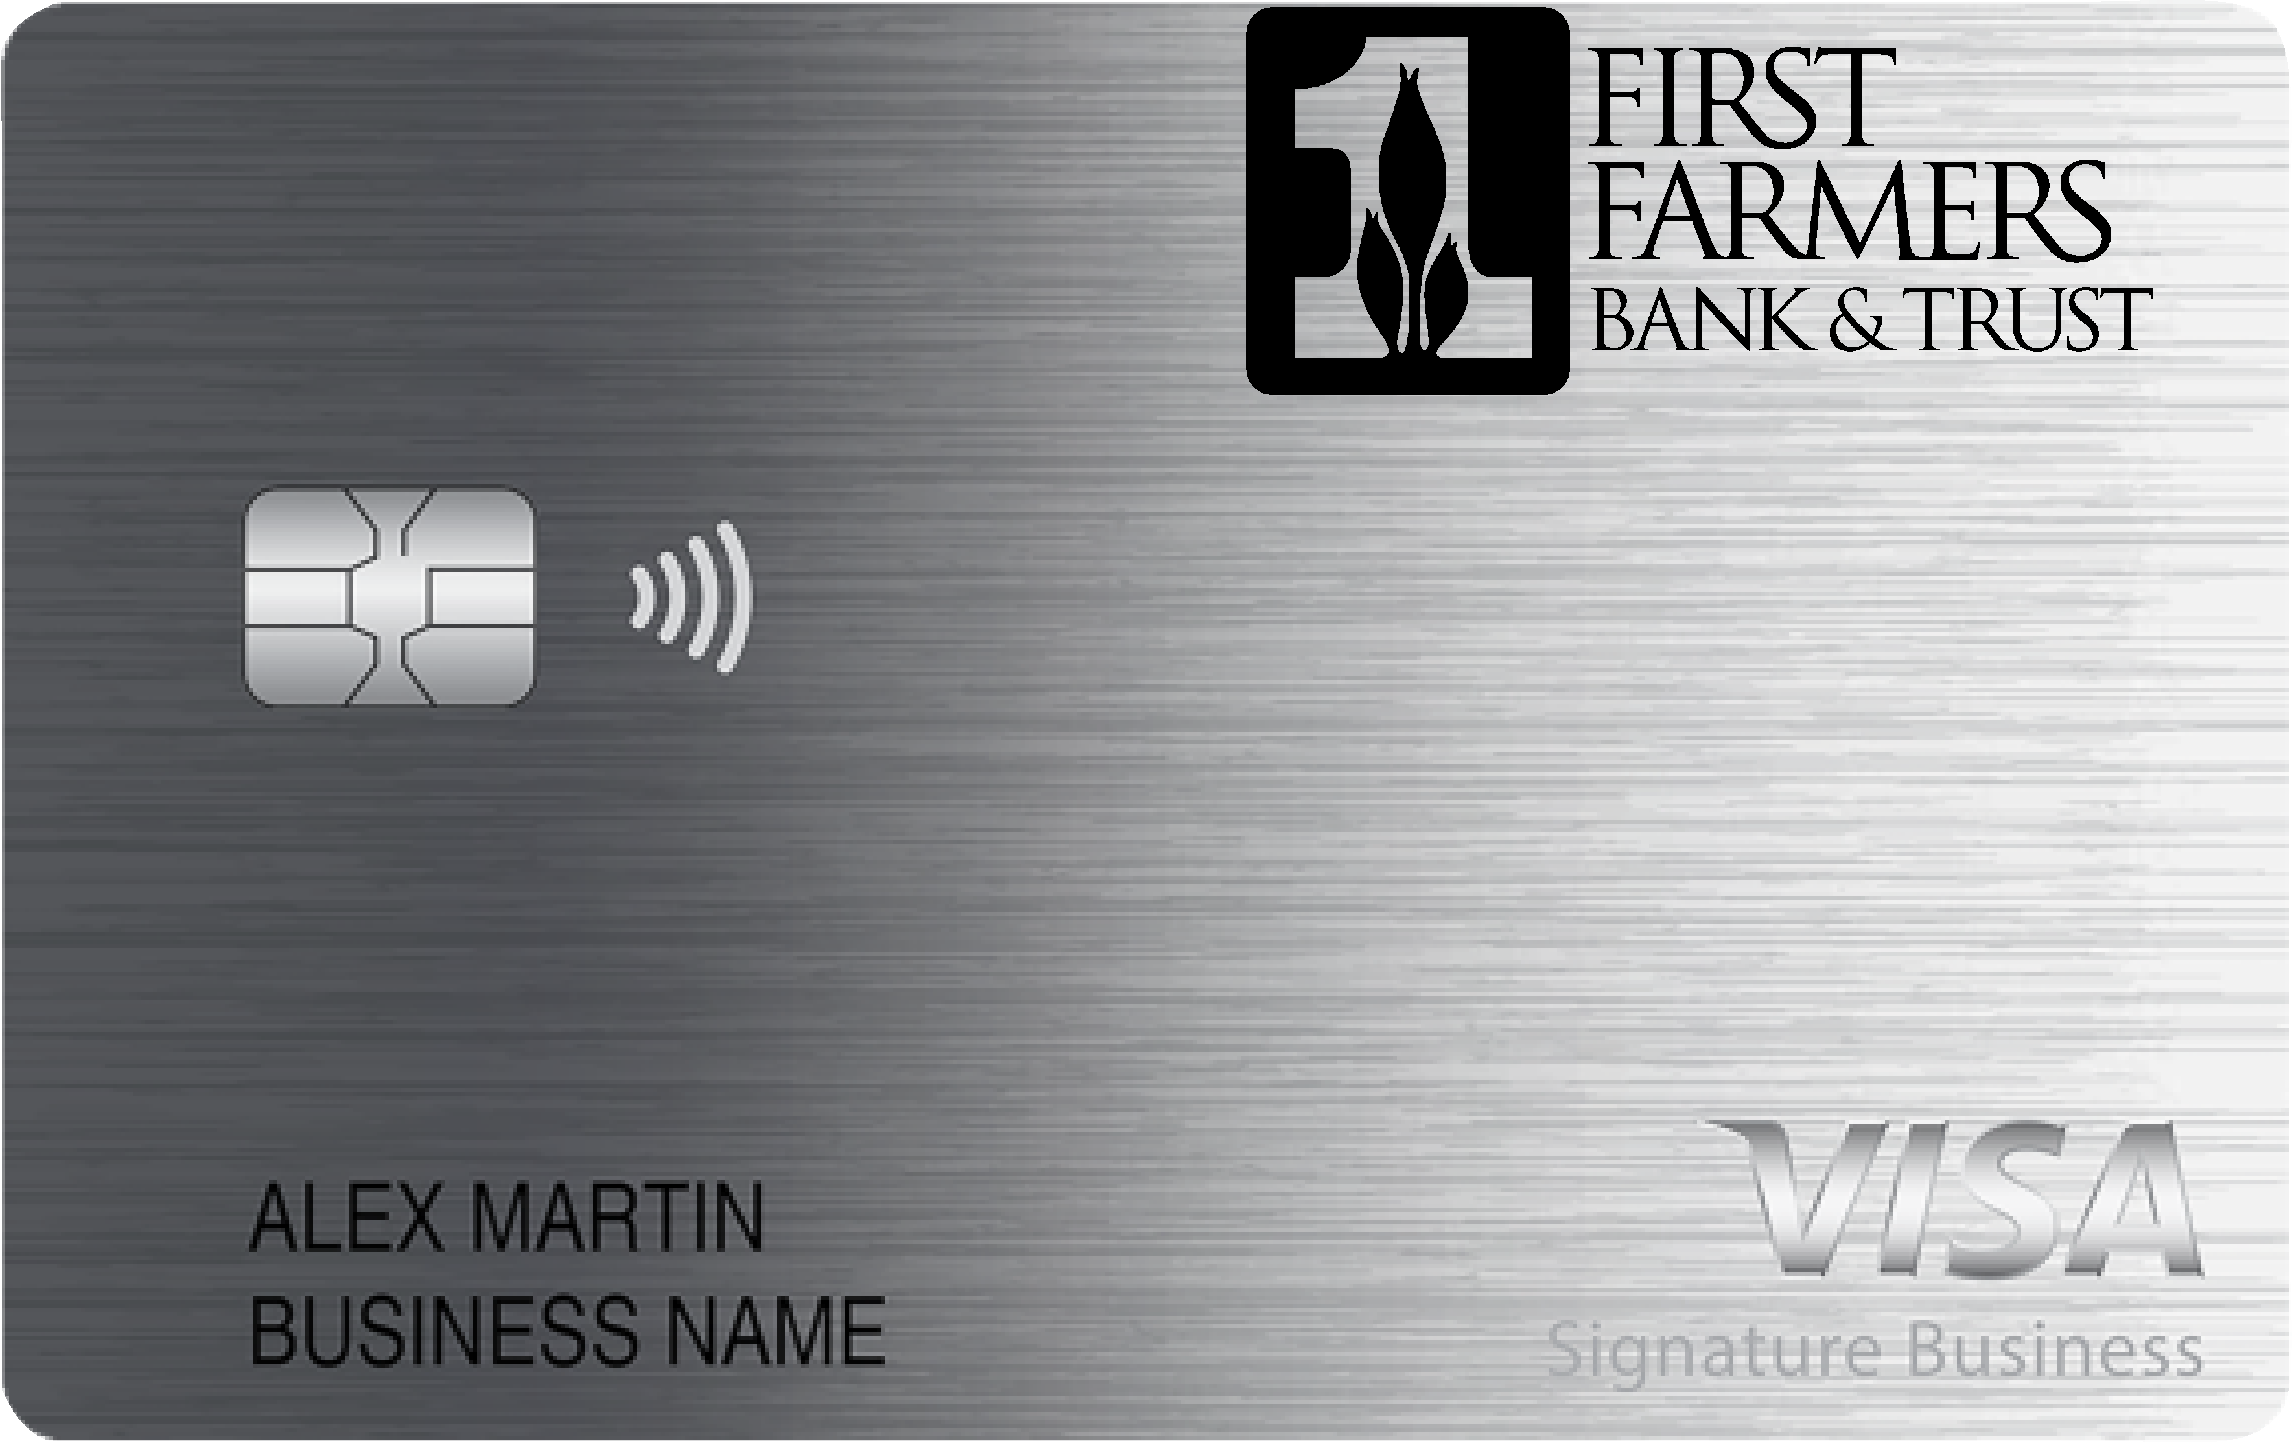 First Farmers Bank & Trust Smart Business Rewards Card